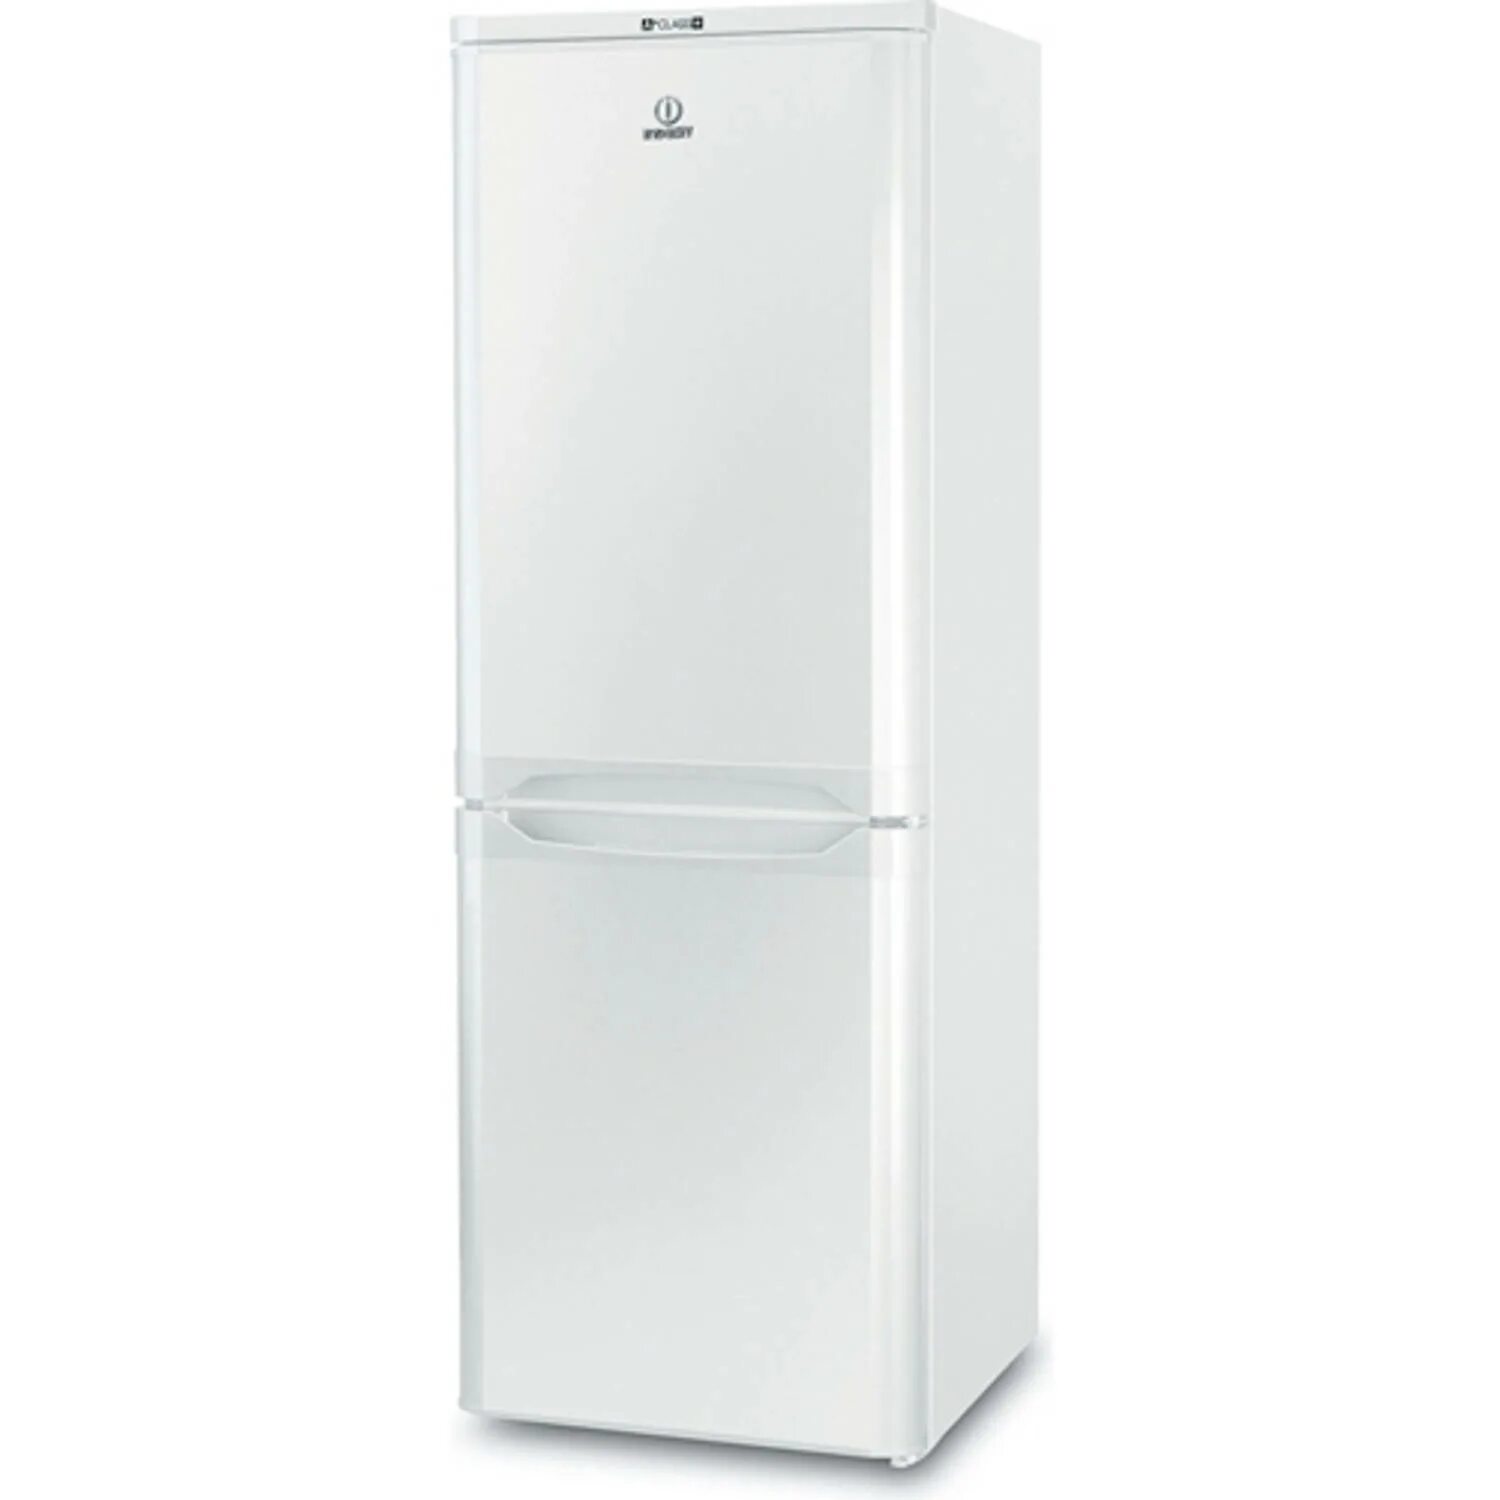 Холодильник купить цена индезит. Холодильник Индезит 207170130.